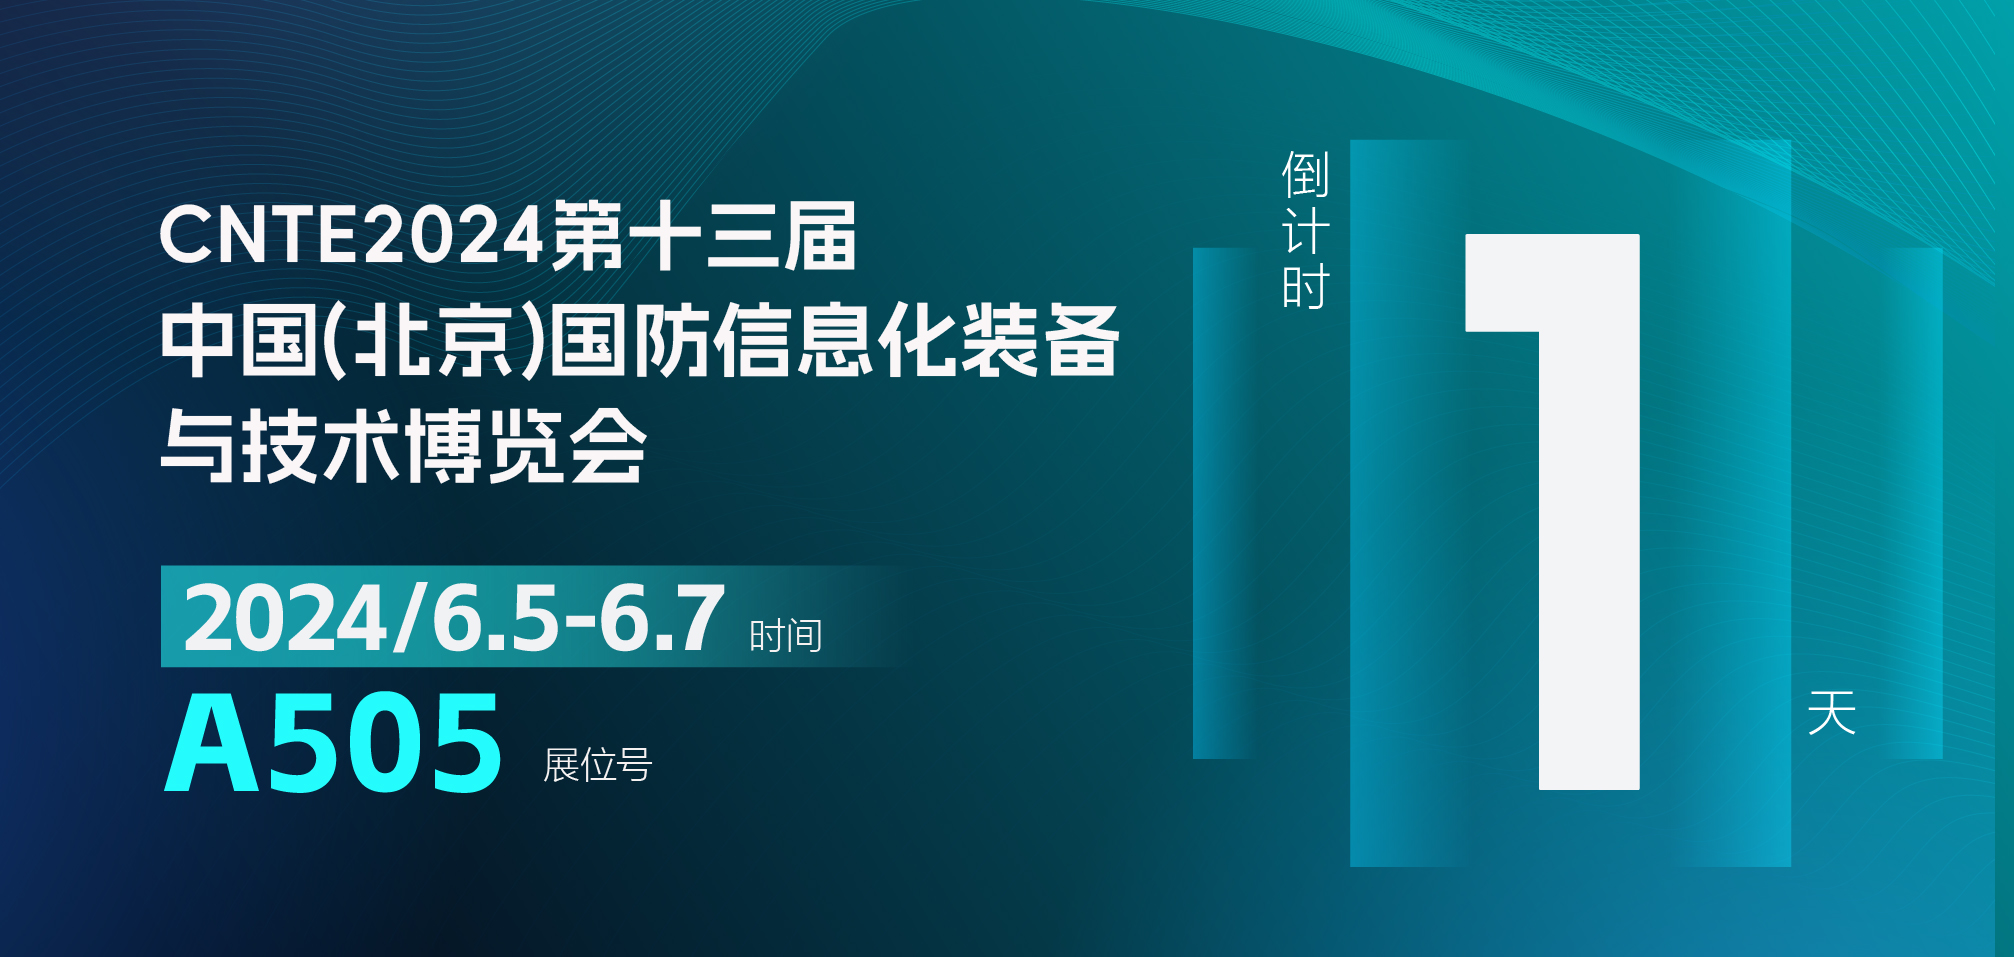 CNTE2024 第十三屆北京國防信息化博覽會倒計時 1 天，精彩將至！